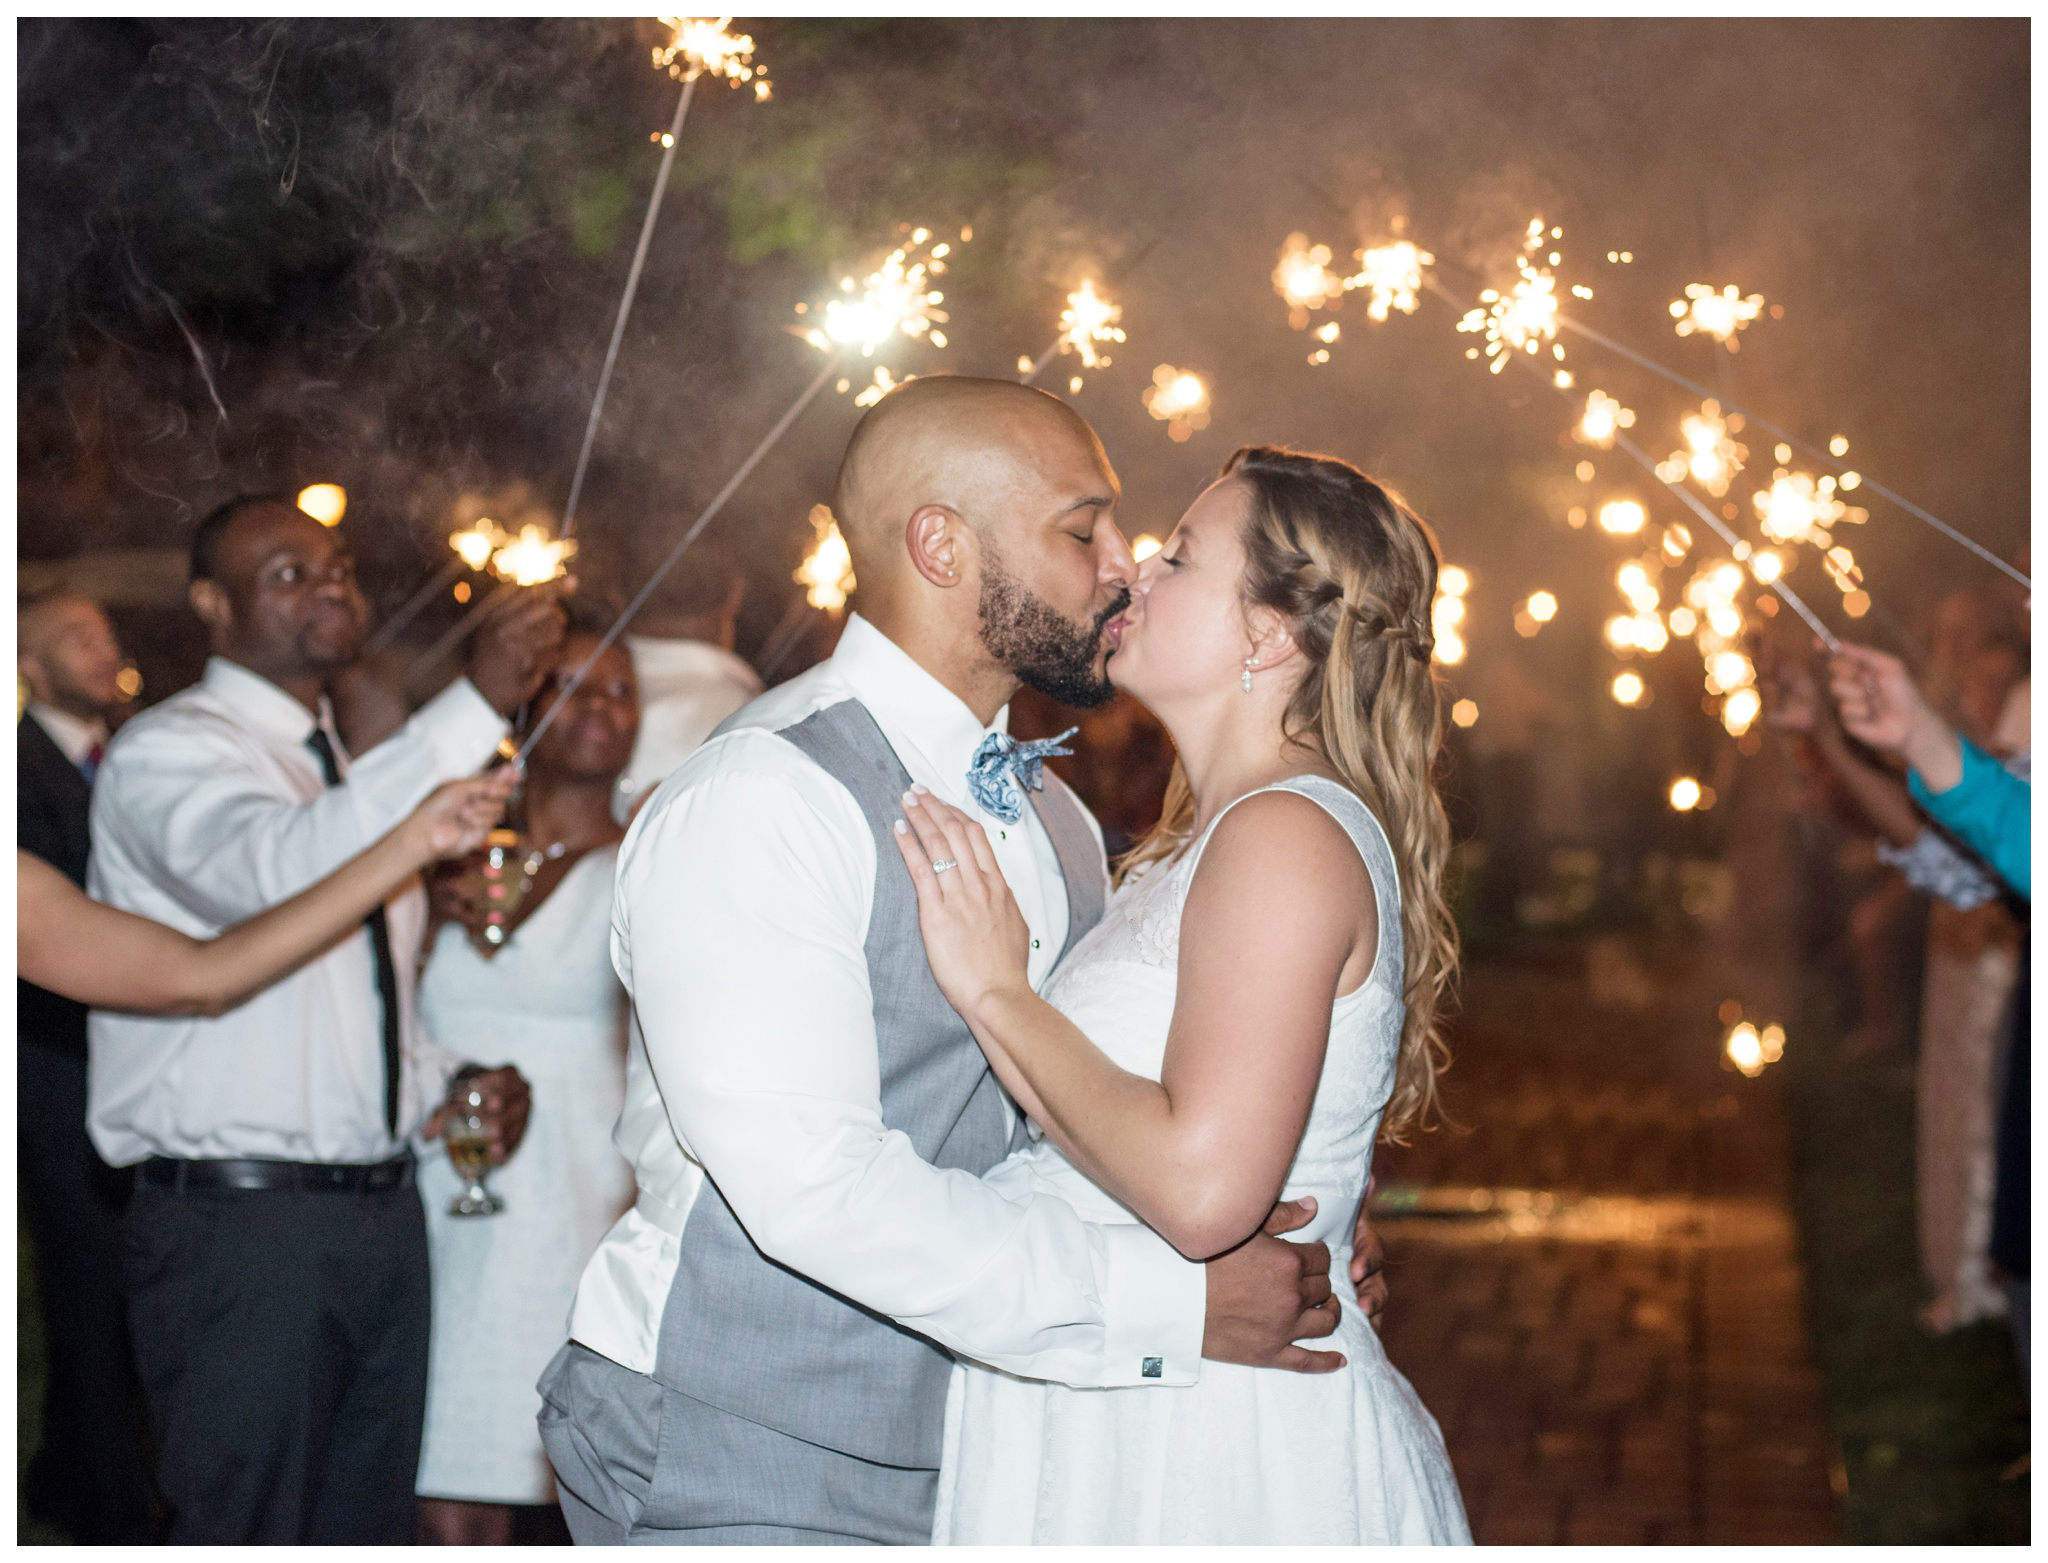 wedding night sparkler sendoff vs ending photography coverage early